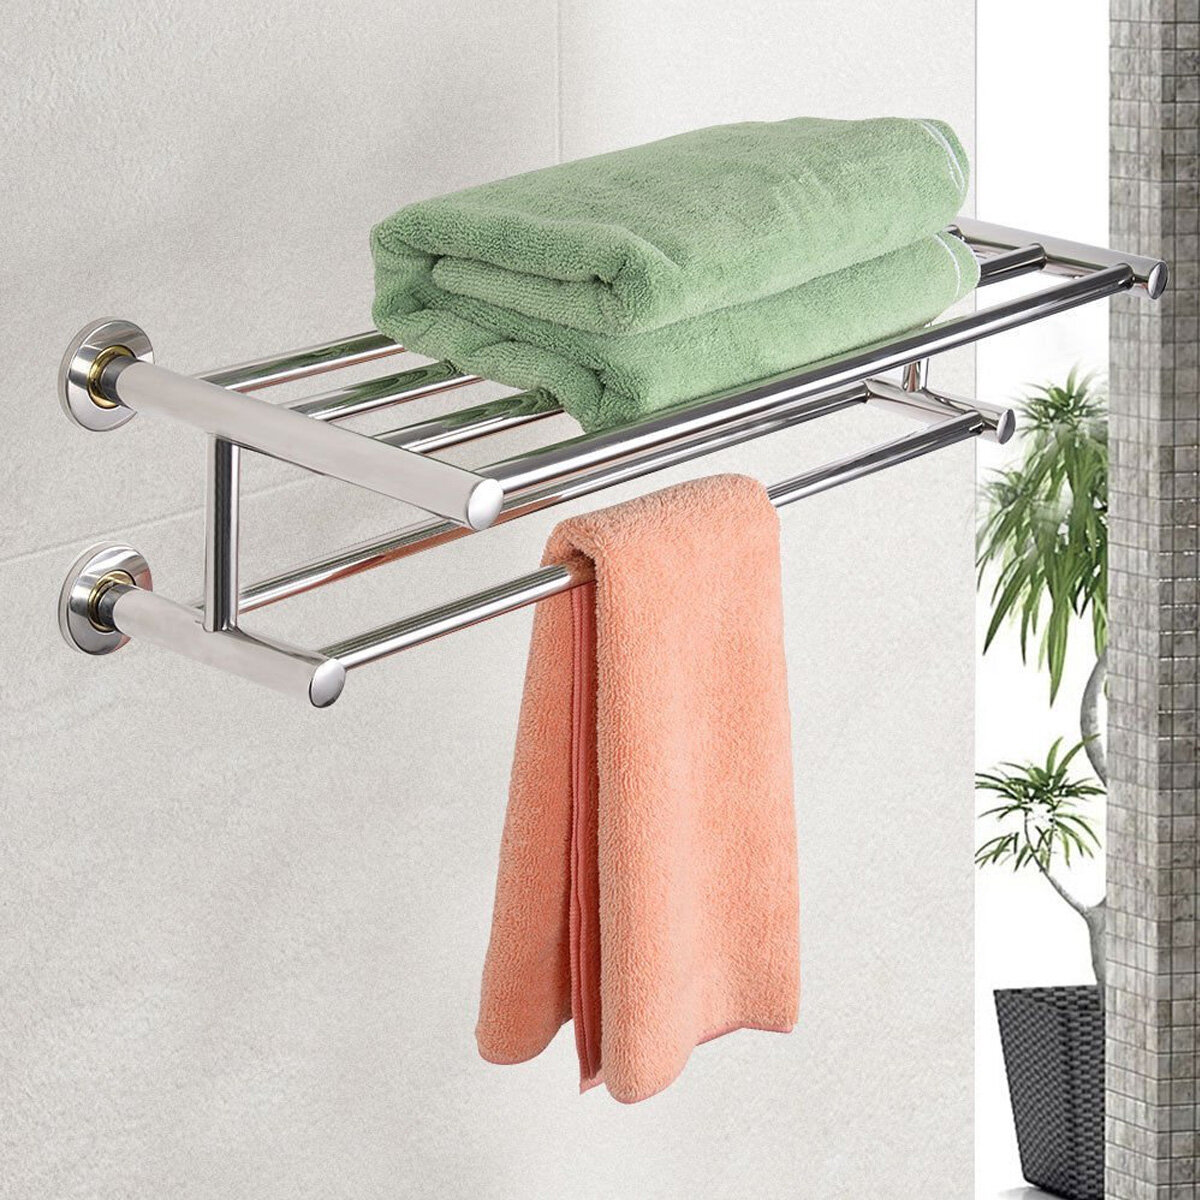 304 Stainless Steel Double Tiers Towel Rail Rack Shelf Wall Mounted Bathroom